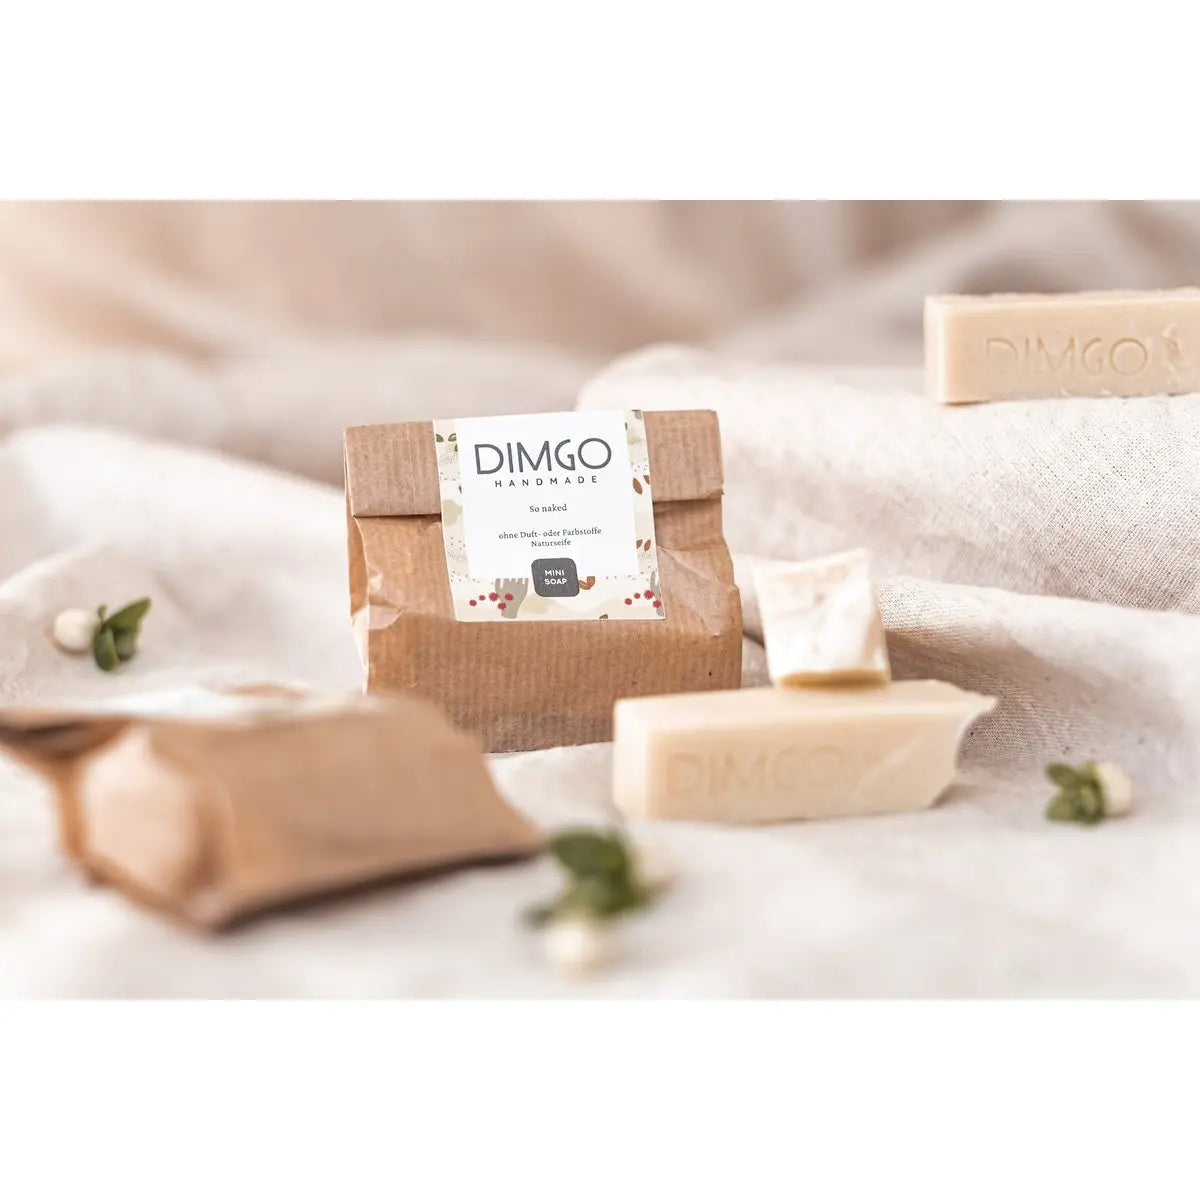 Dimgo handmade zeepbar so naked handgemaakteskincare